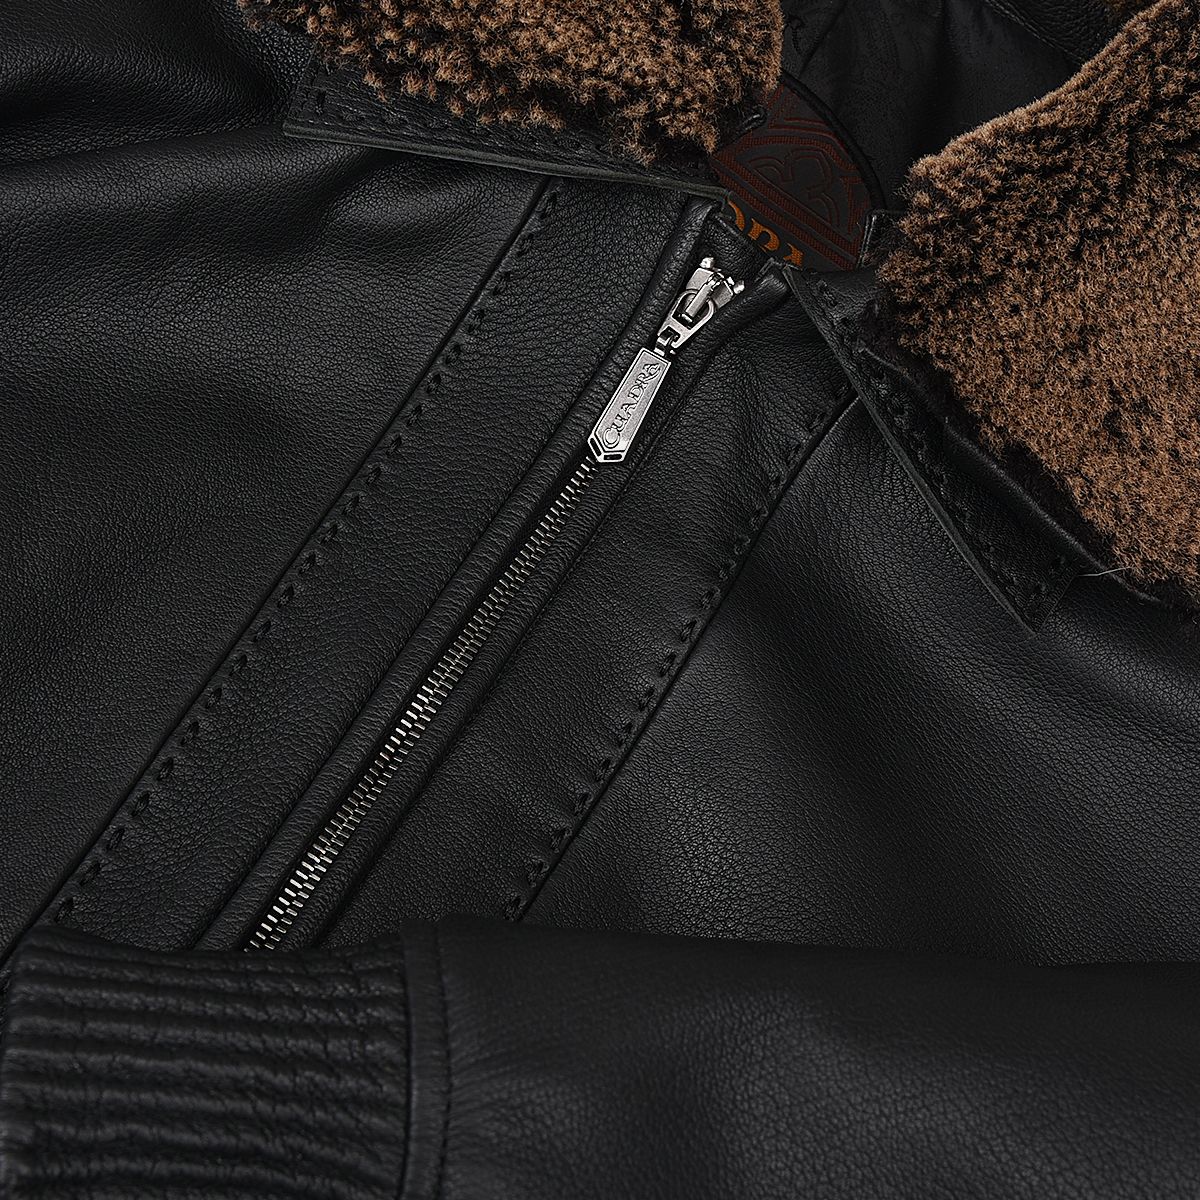 H321COB - Cuadra black casual fashion goat leather motorcycle aviator jacket for men-Kuet.us